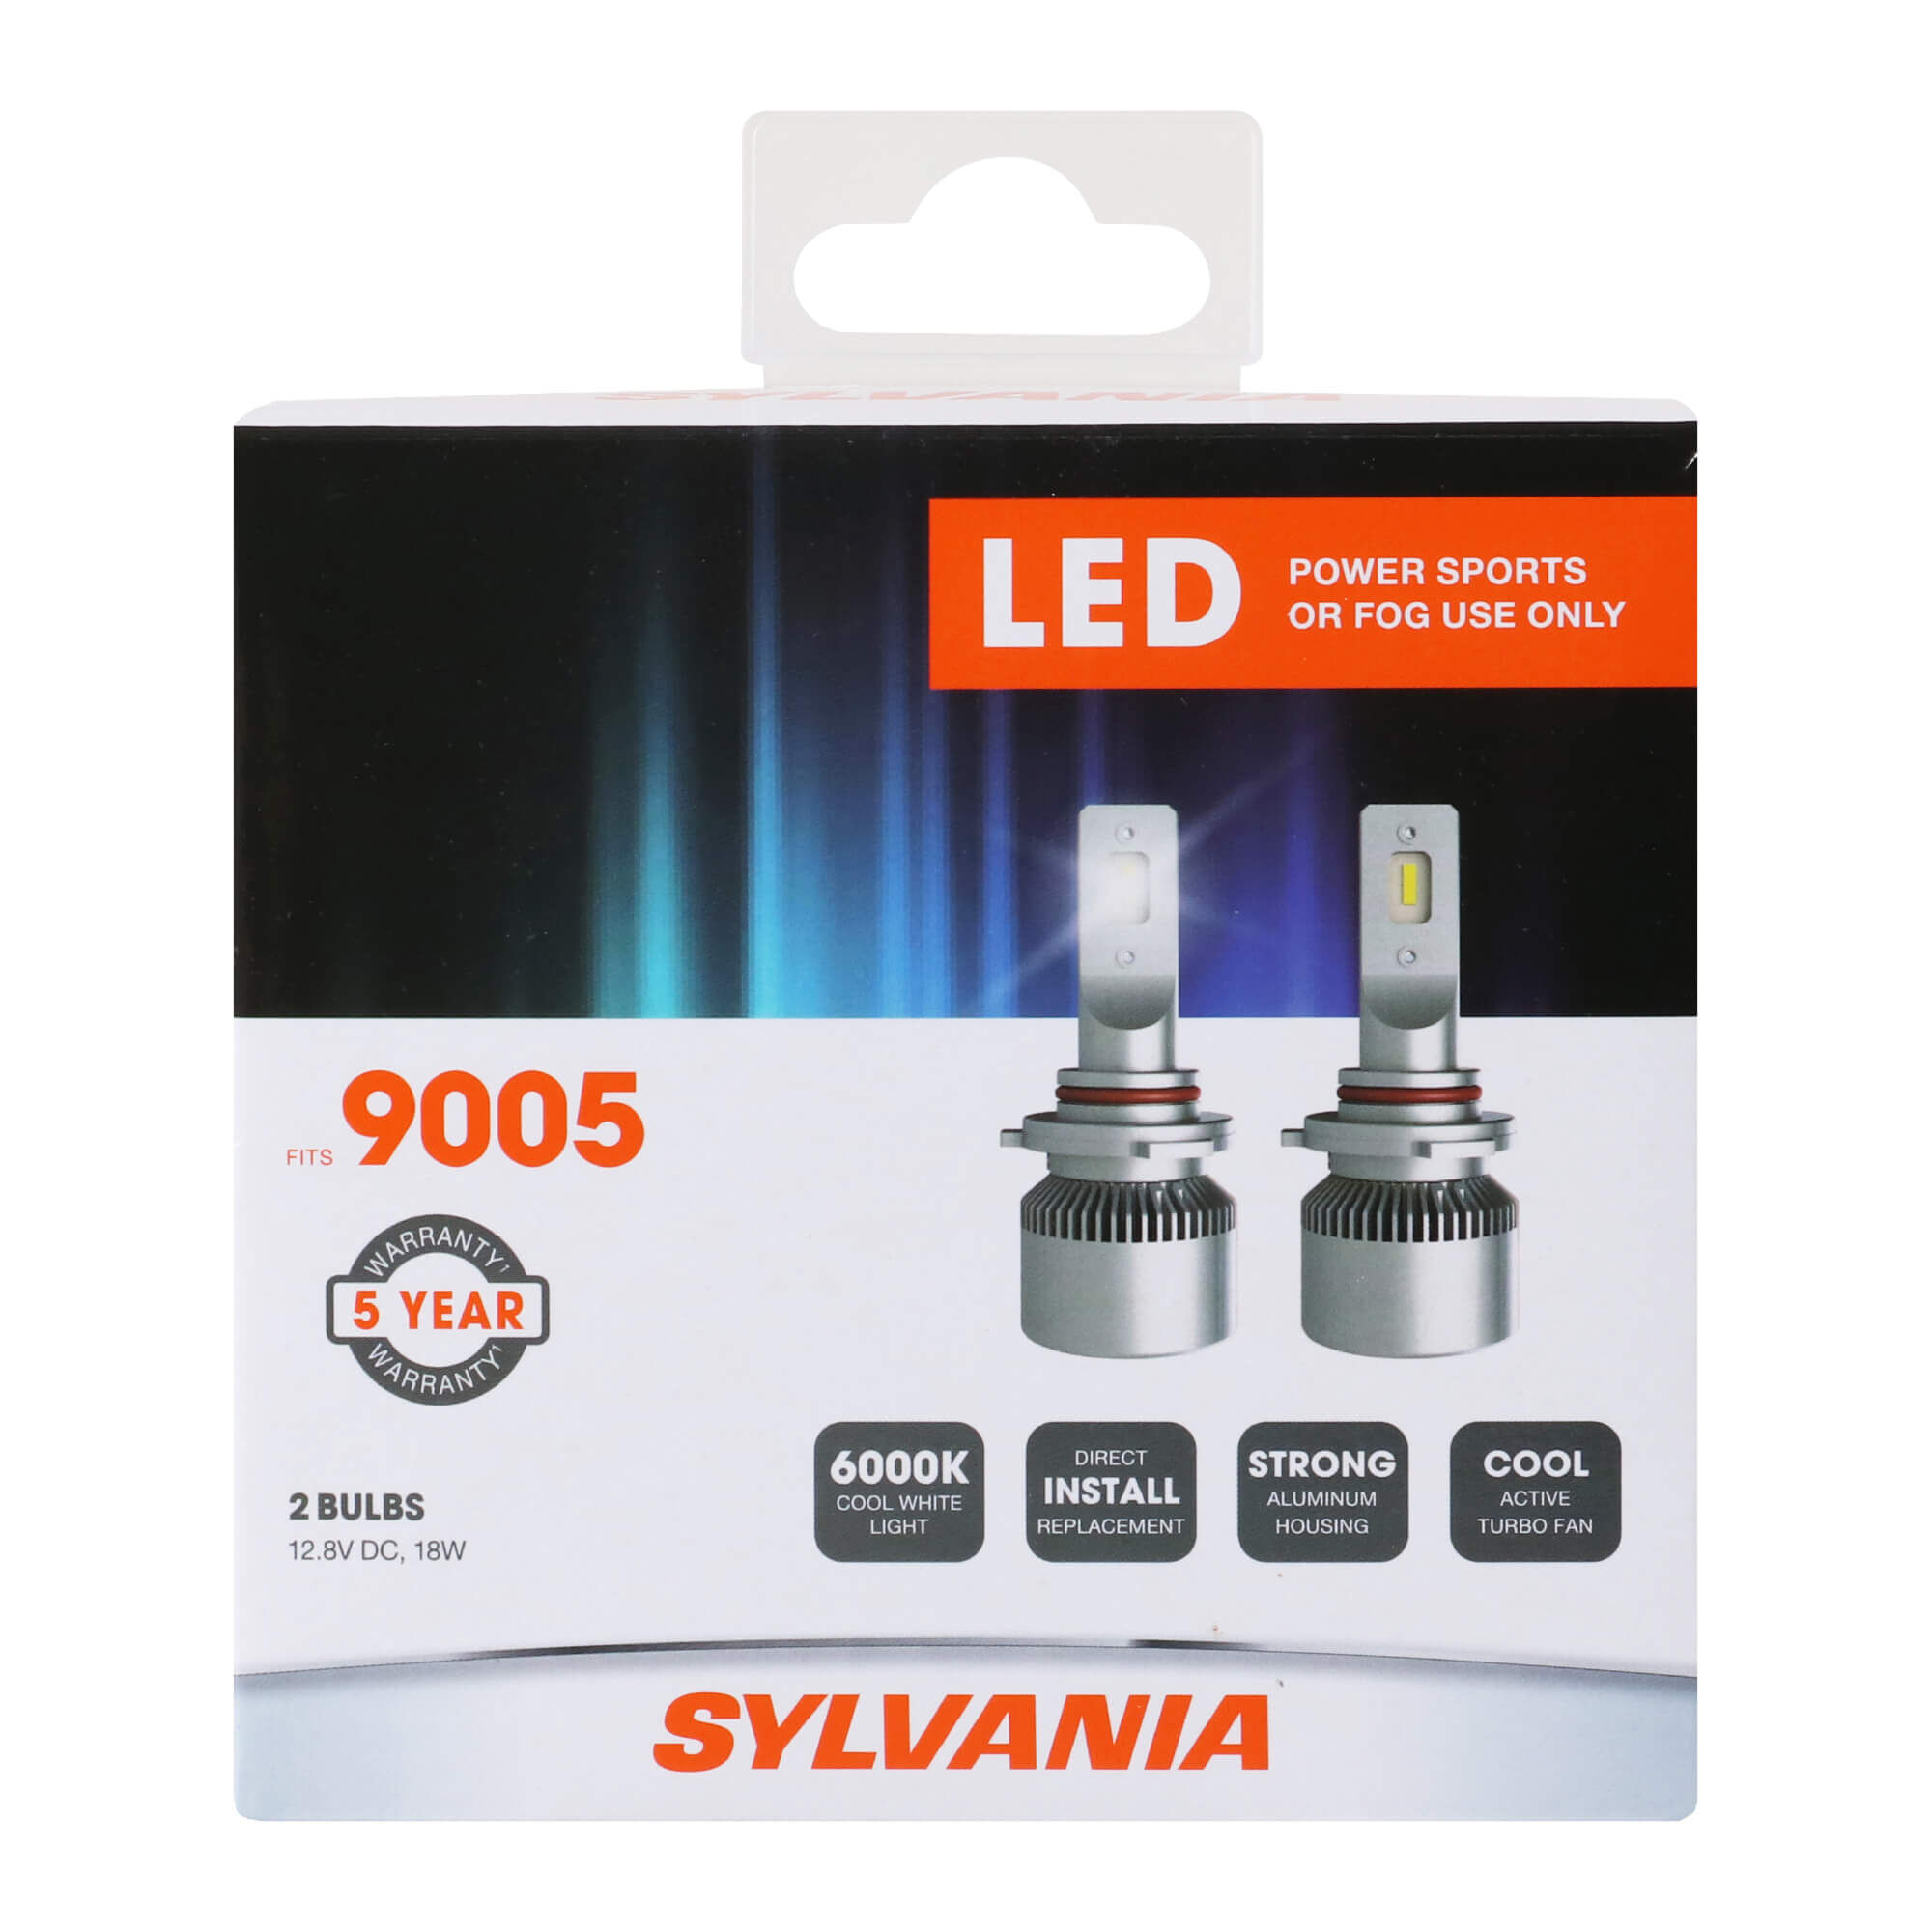 SYLVANIA General Lighting 75235 LED Bulb